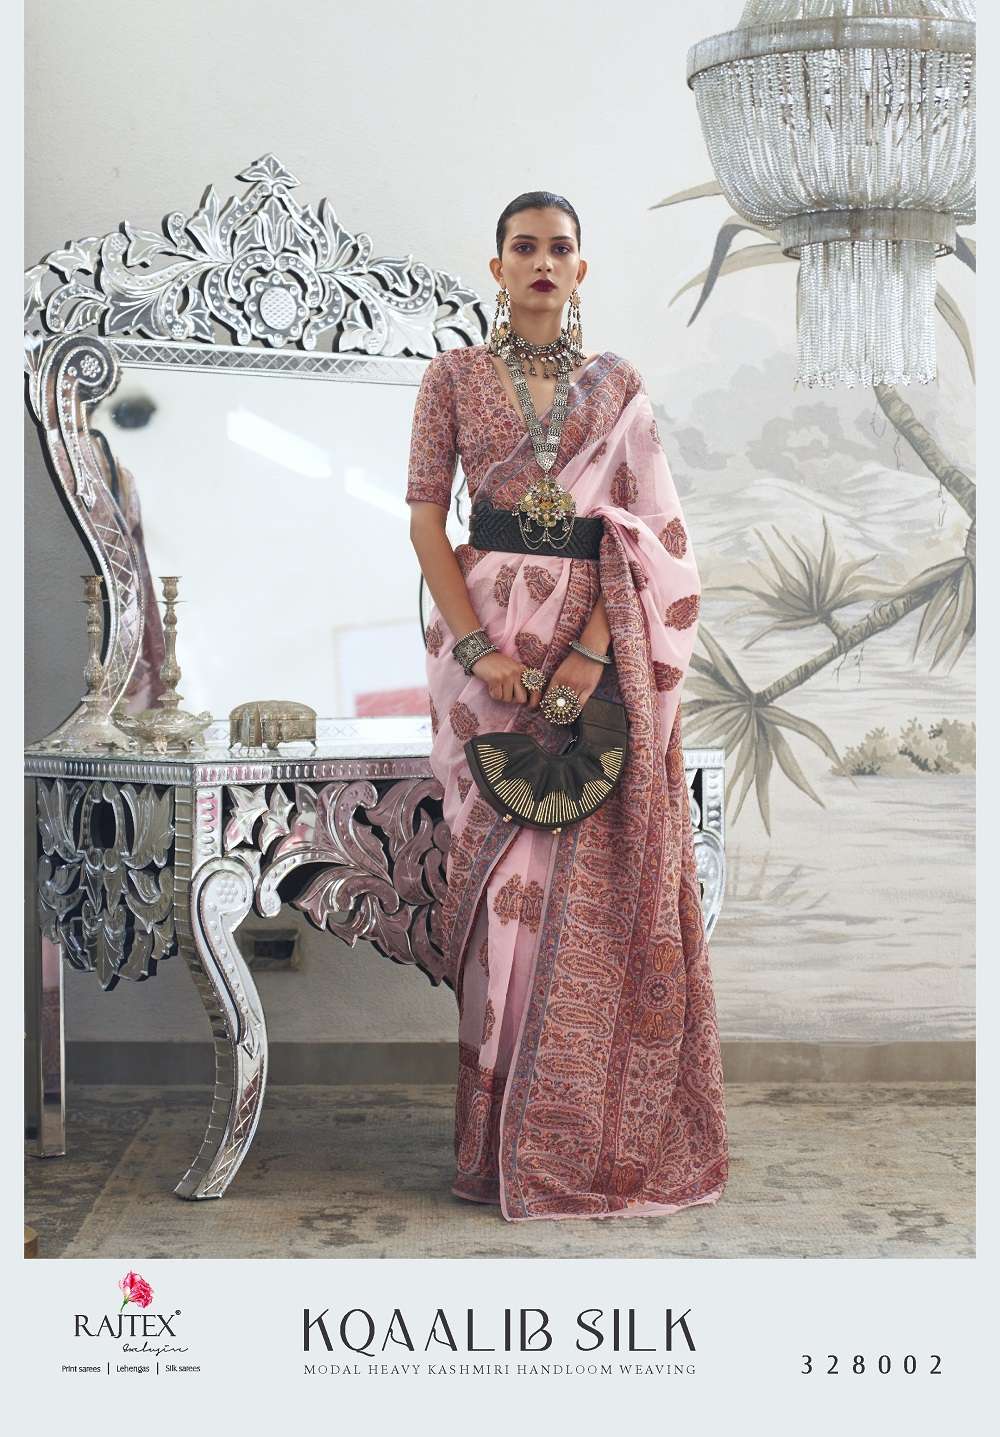 Rajtex Kqaalib Silk Heavy Handloom Weaving Saree Collection Wholesale catalog